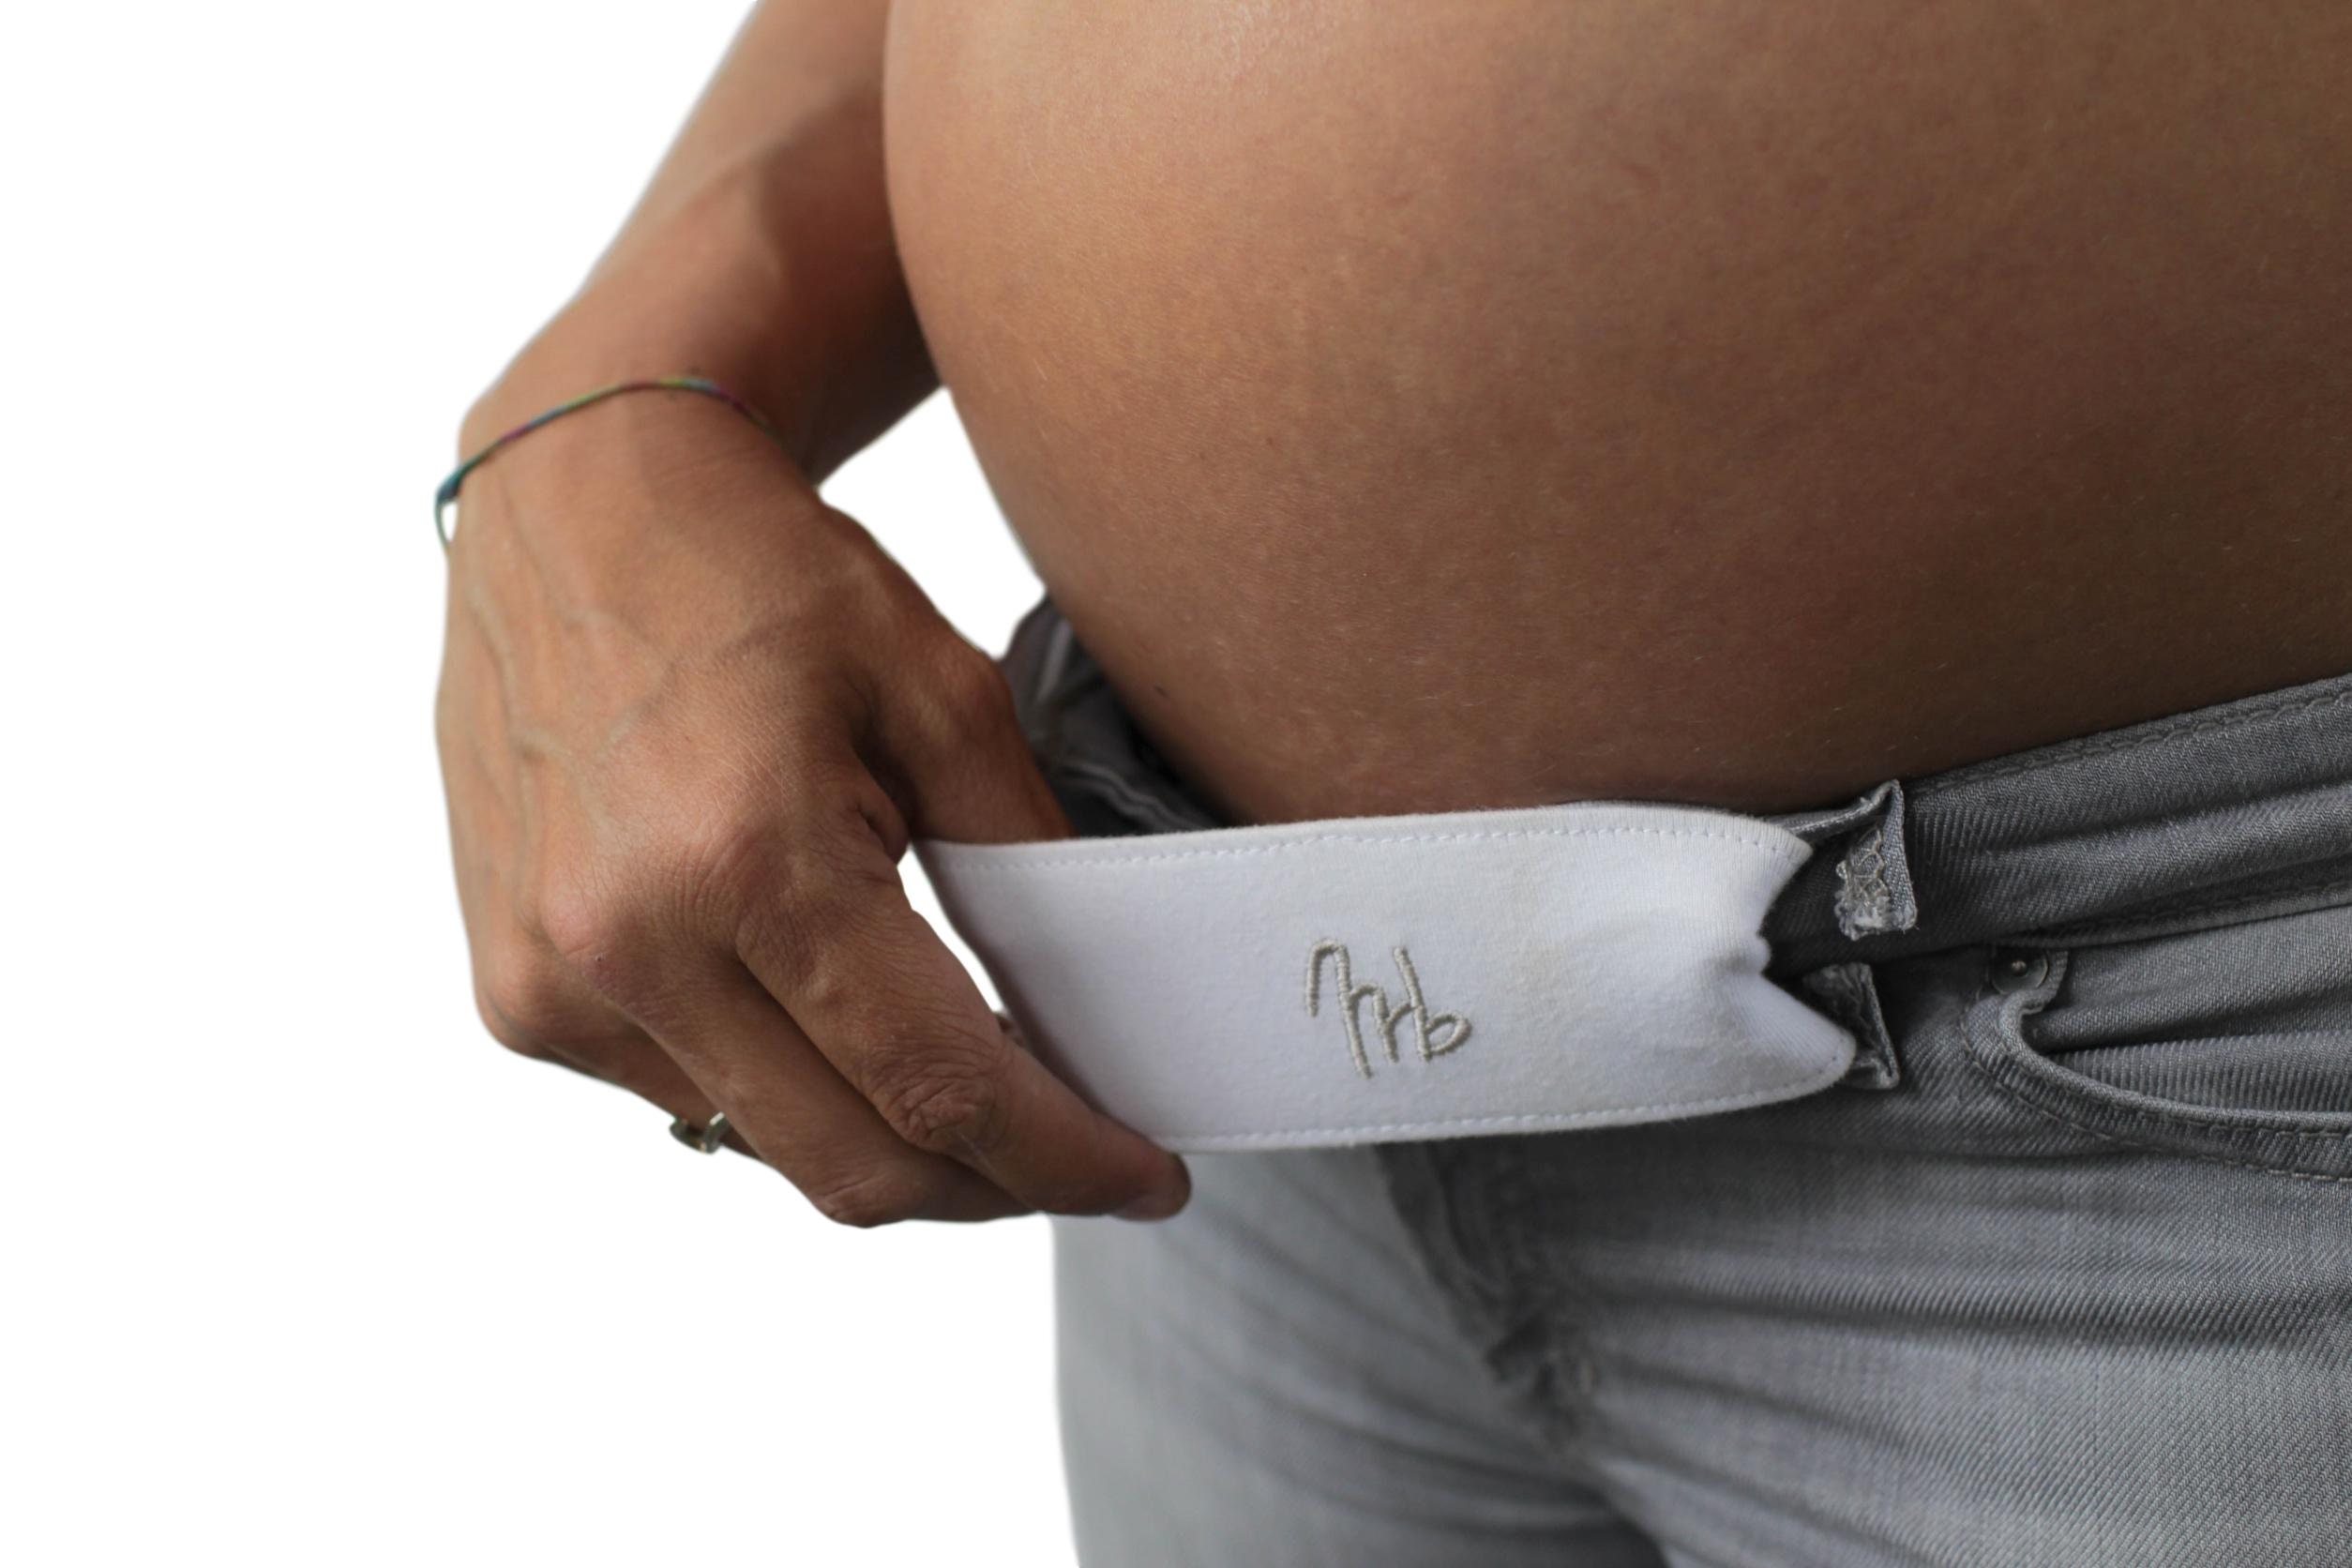 Syhood Adjustable Maternity Pants Extender Elastic Pant Button Extenders  Waistband Extender for Pregnancy Women